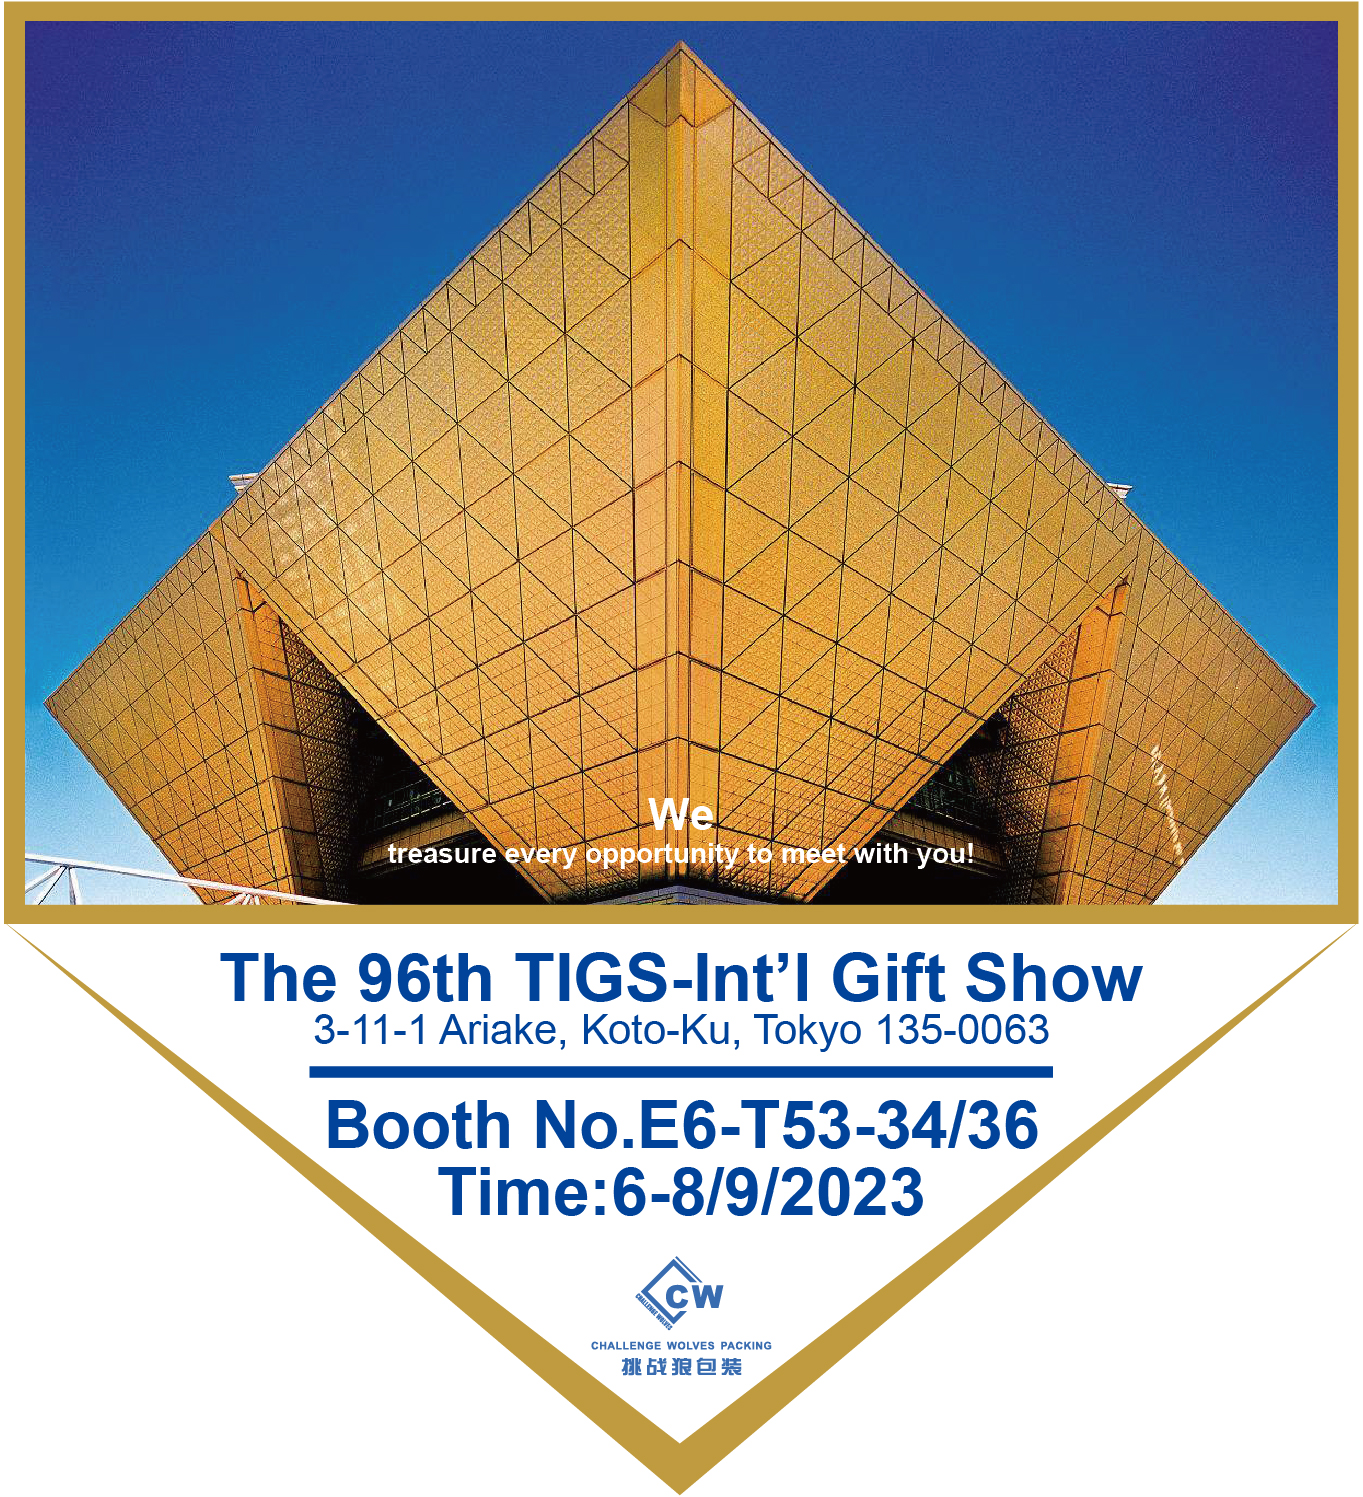 The 96th TIGS-IntI Gift Show